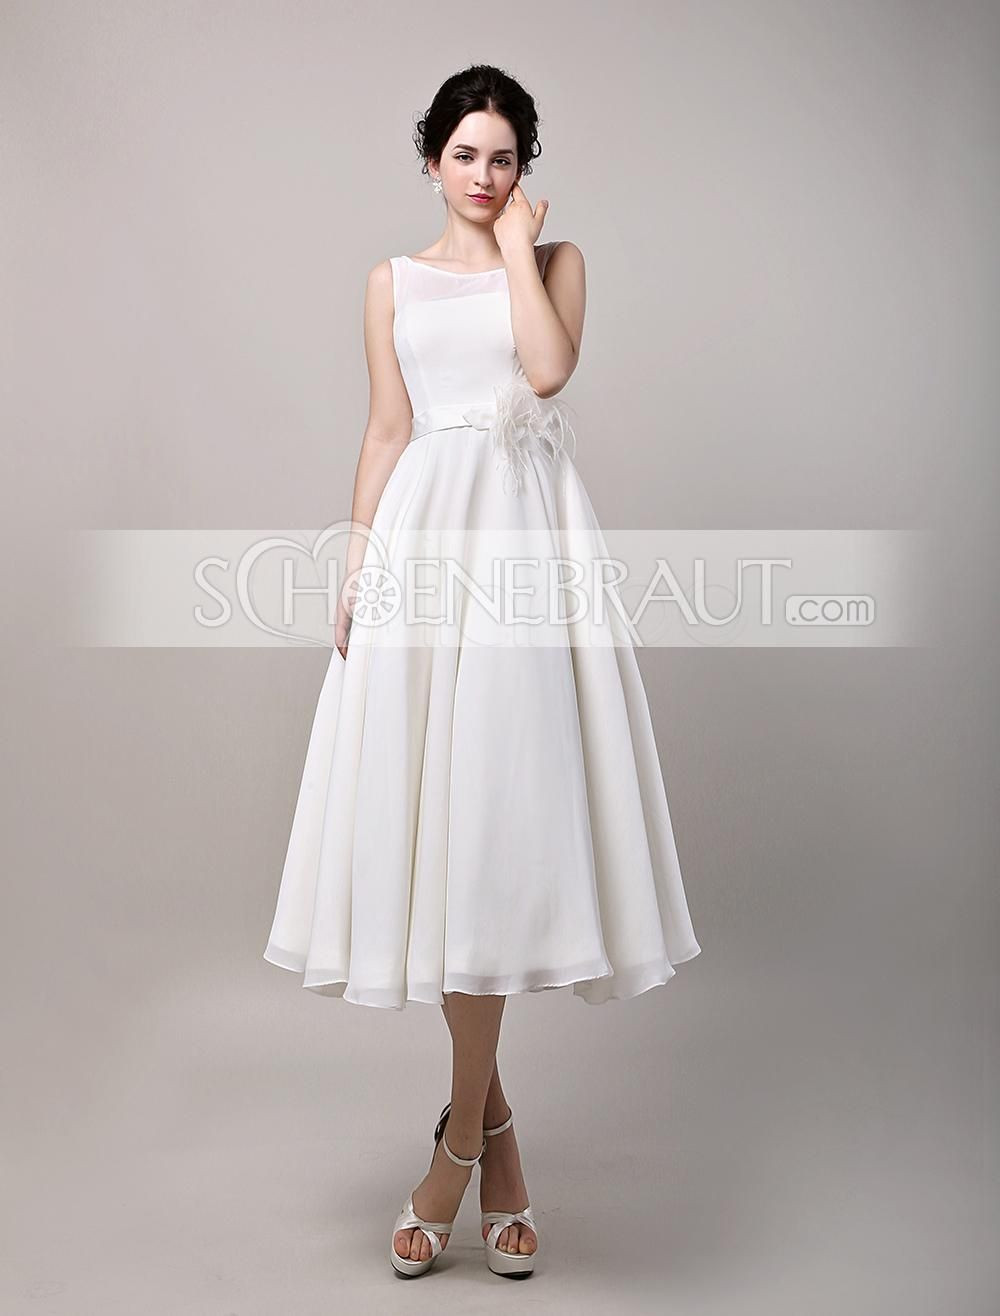 Hochzeitskleid Kurz Vintage
 Audrey Hepburn Vintage Hochzeitskleid Tüll kurz mit Spitze